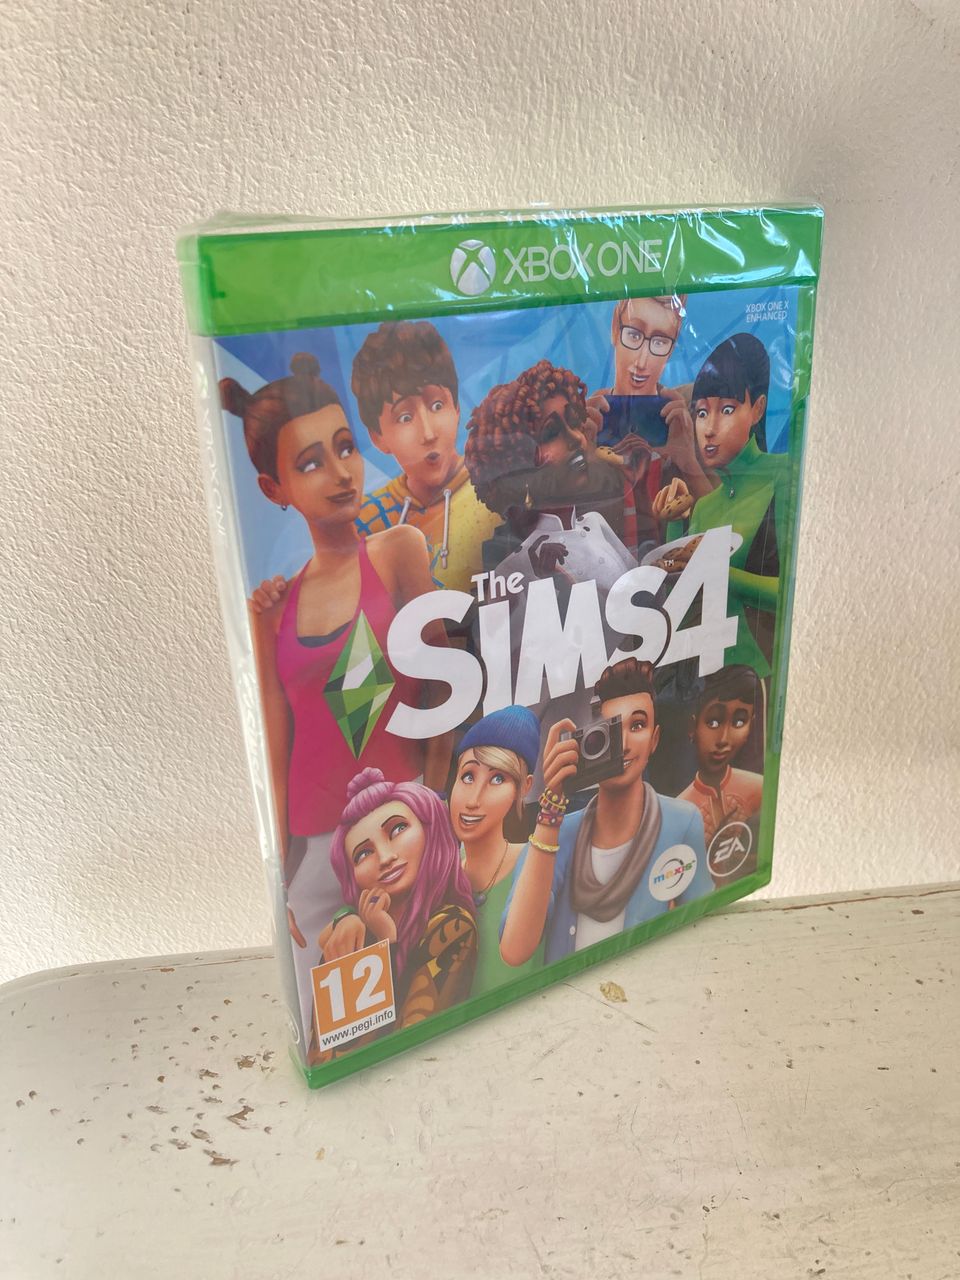 SIMS 4 (Xbox One)